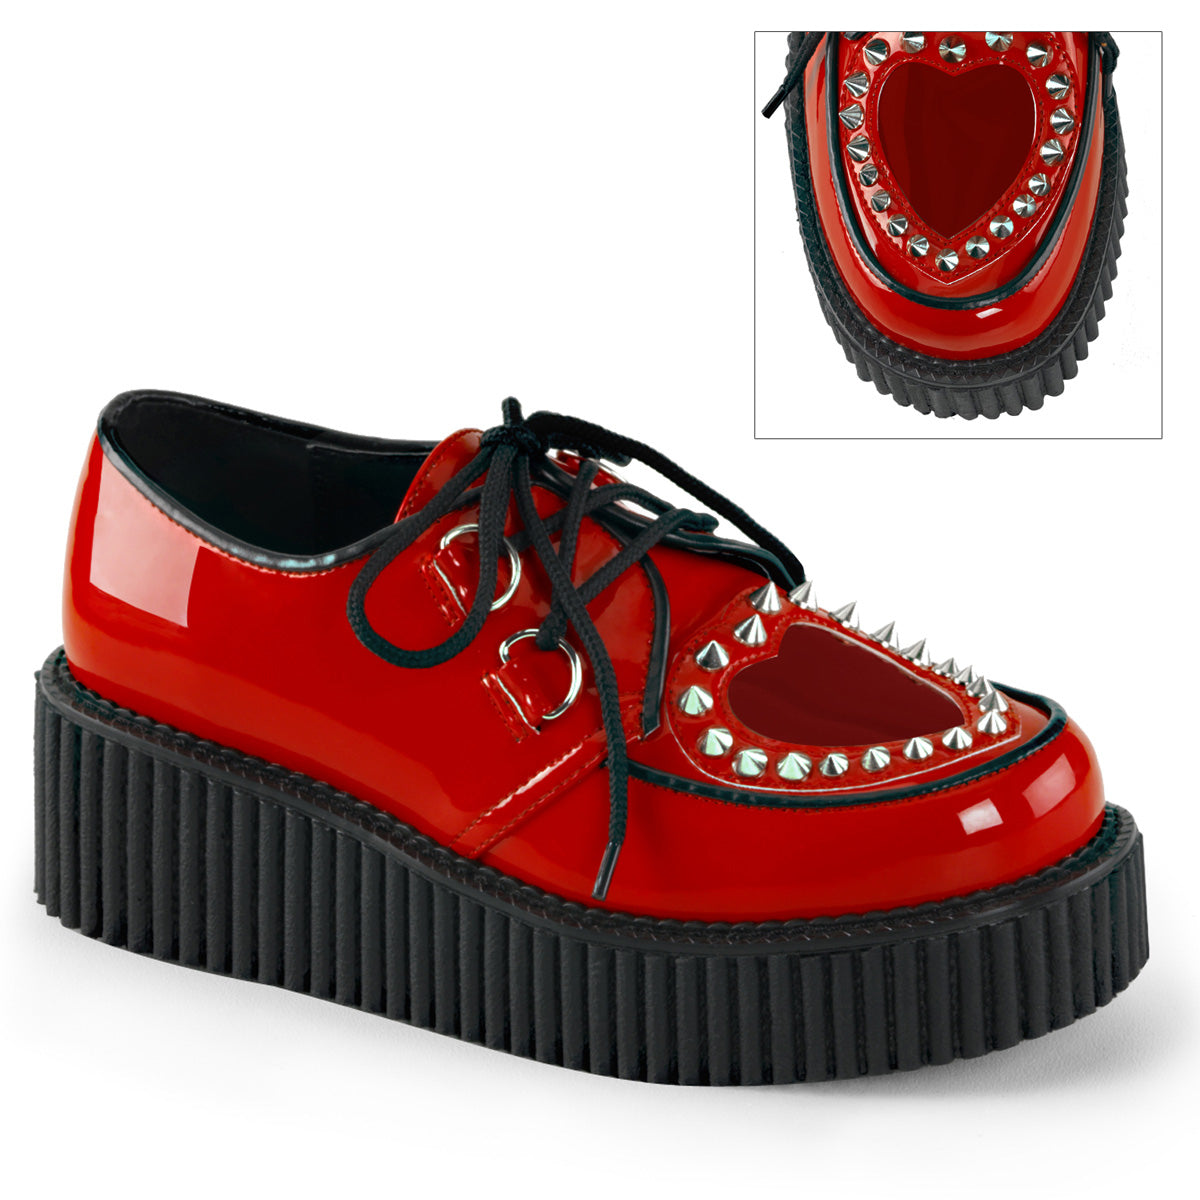 DemoniaCult Chaussure basse des femmes CREEPER-108 Red Pat-PVC